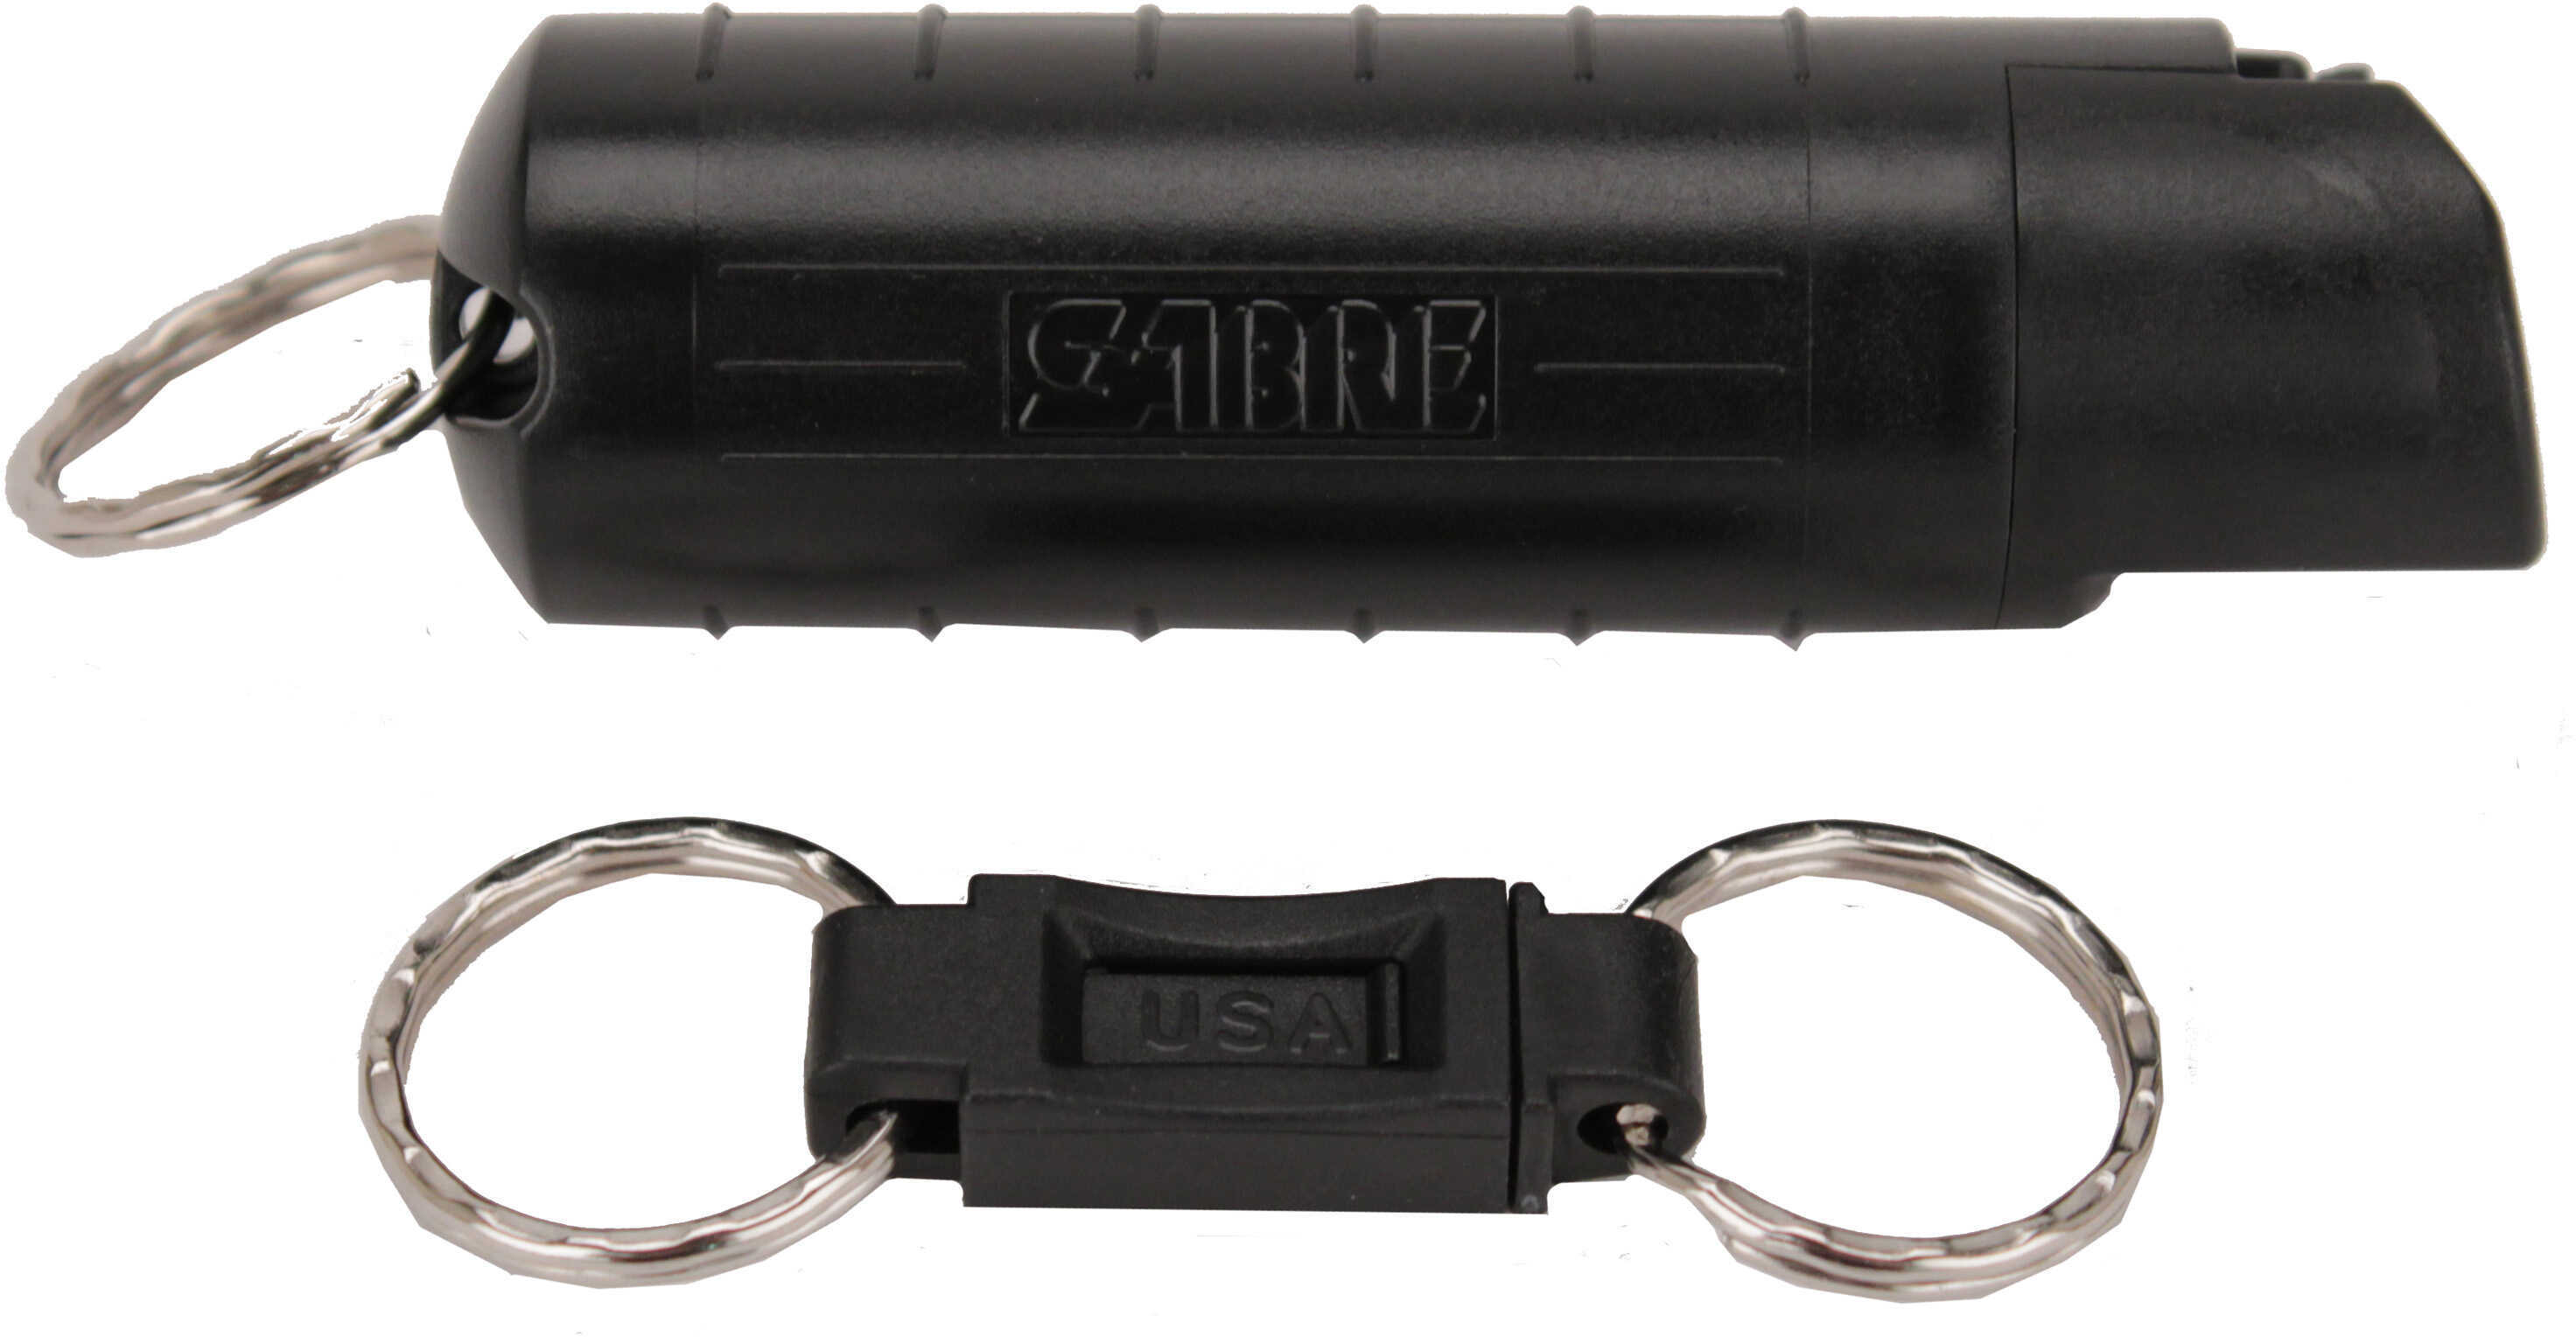 Sabre 3-In-1 Self Defense Spray Black Hard Case, Quick Release Key Ring & Belt Clip Red Pepper, Cs Military Tear Gas & I